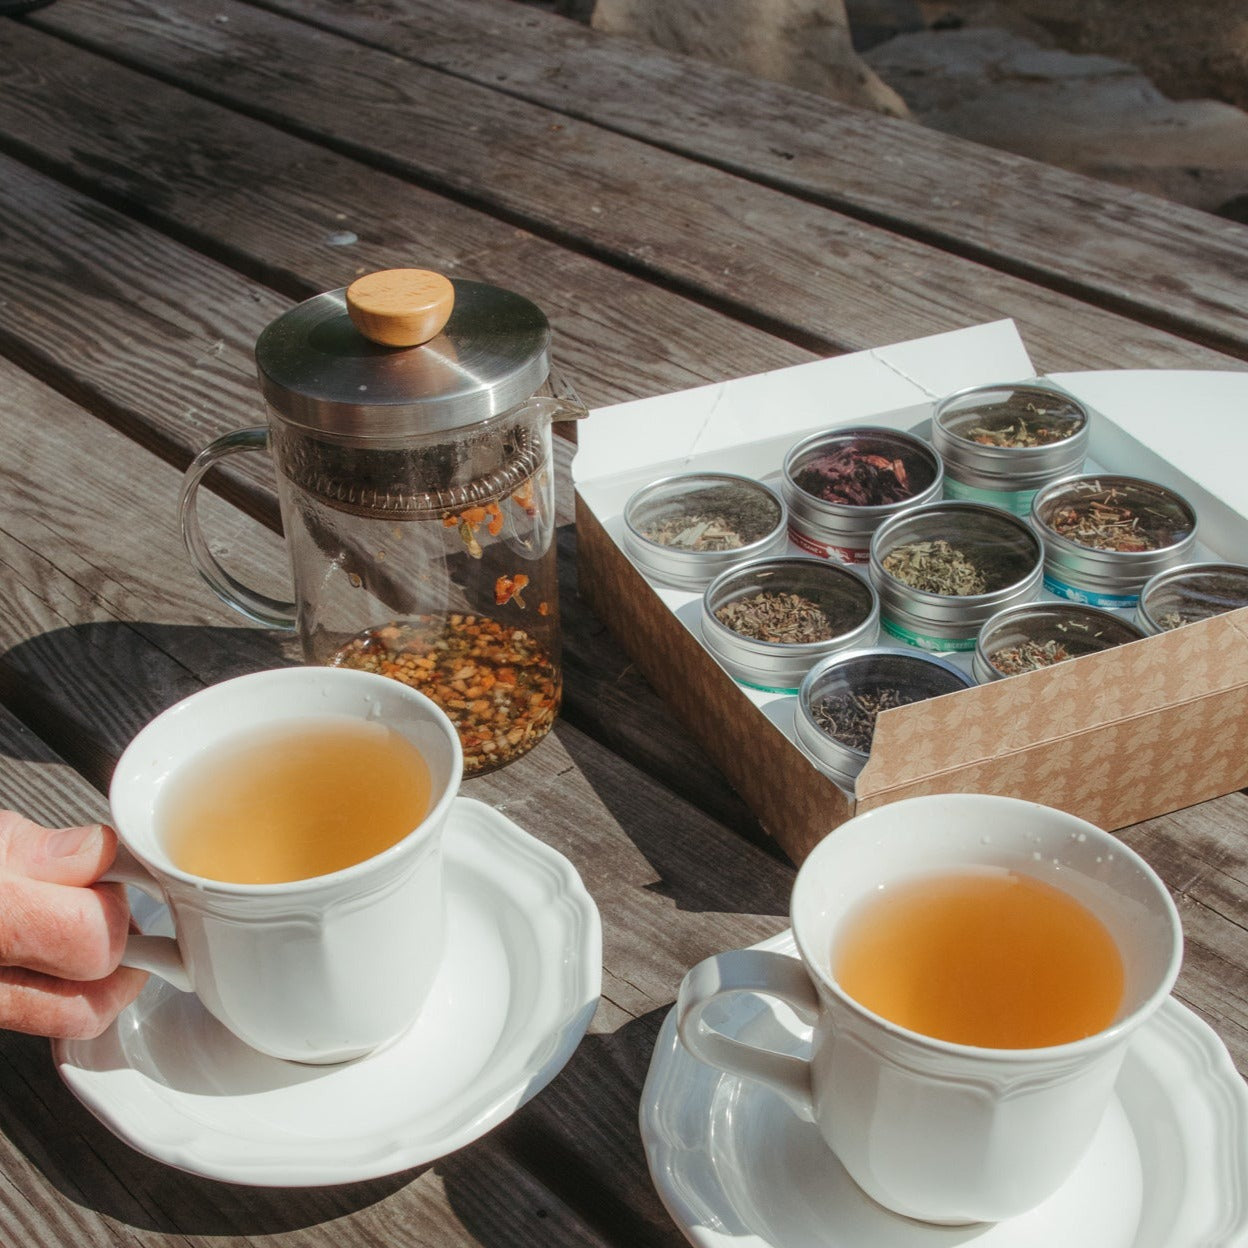 Assorted 9 Tea Sampler - 9 Assorted Premium Loose Leaf Teas & Herbal Tisanes | Heavenly Tea Leaves